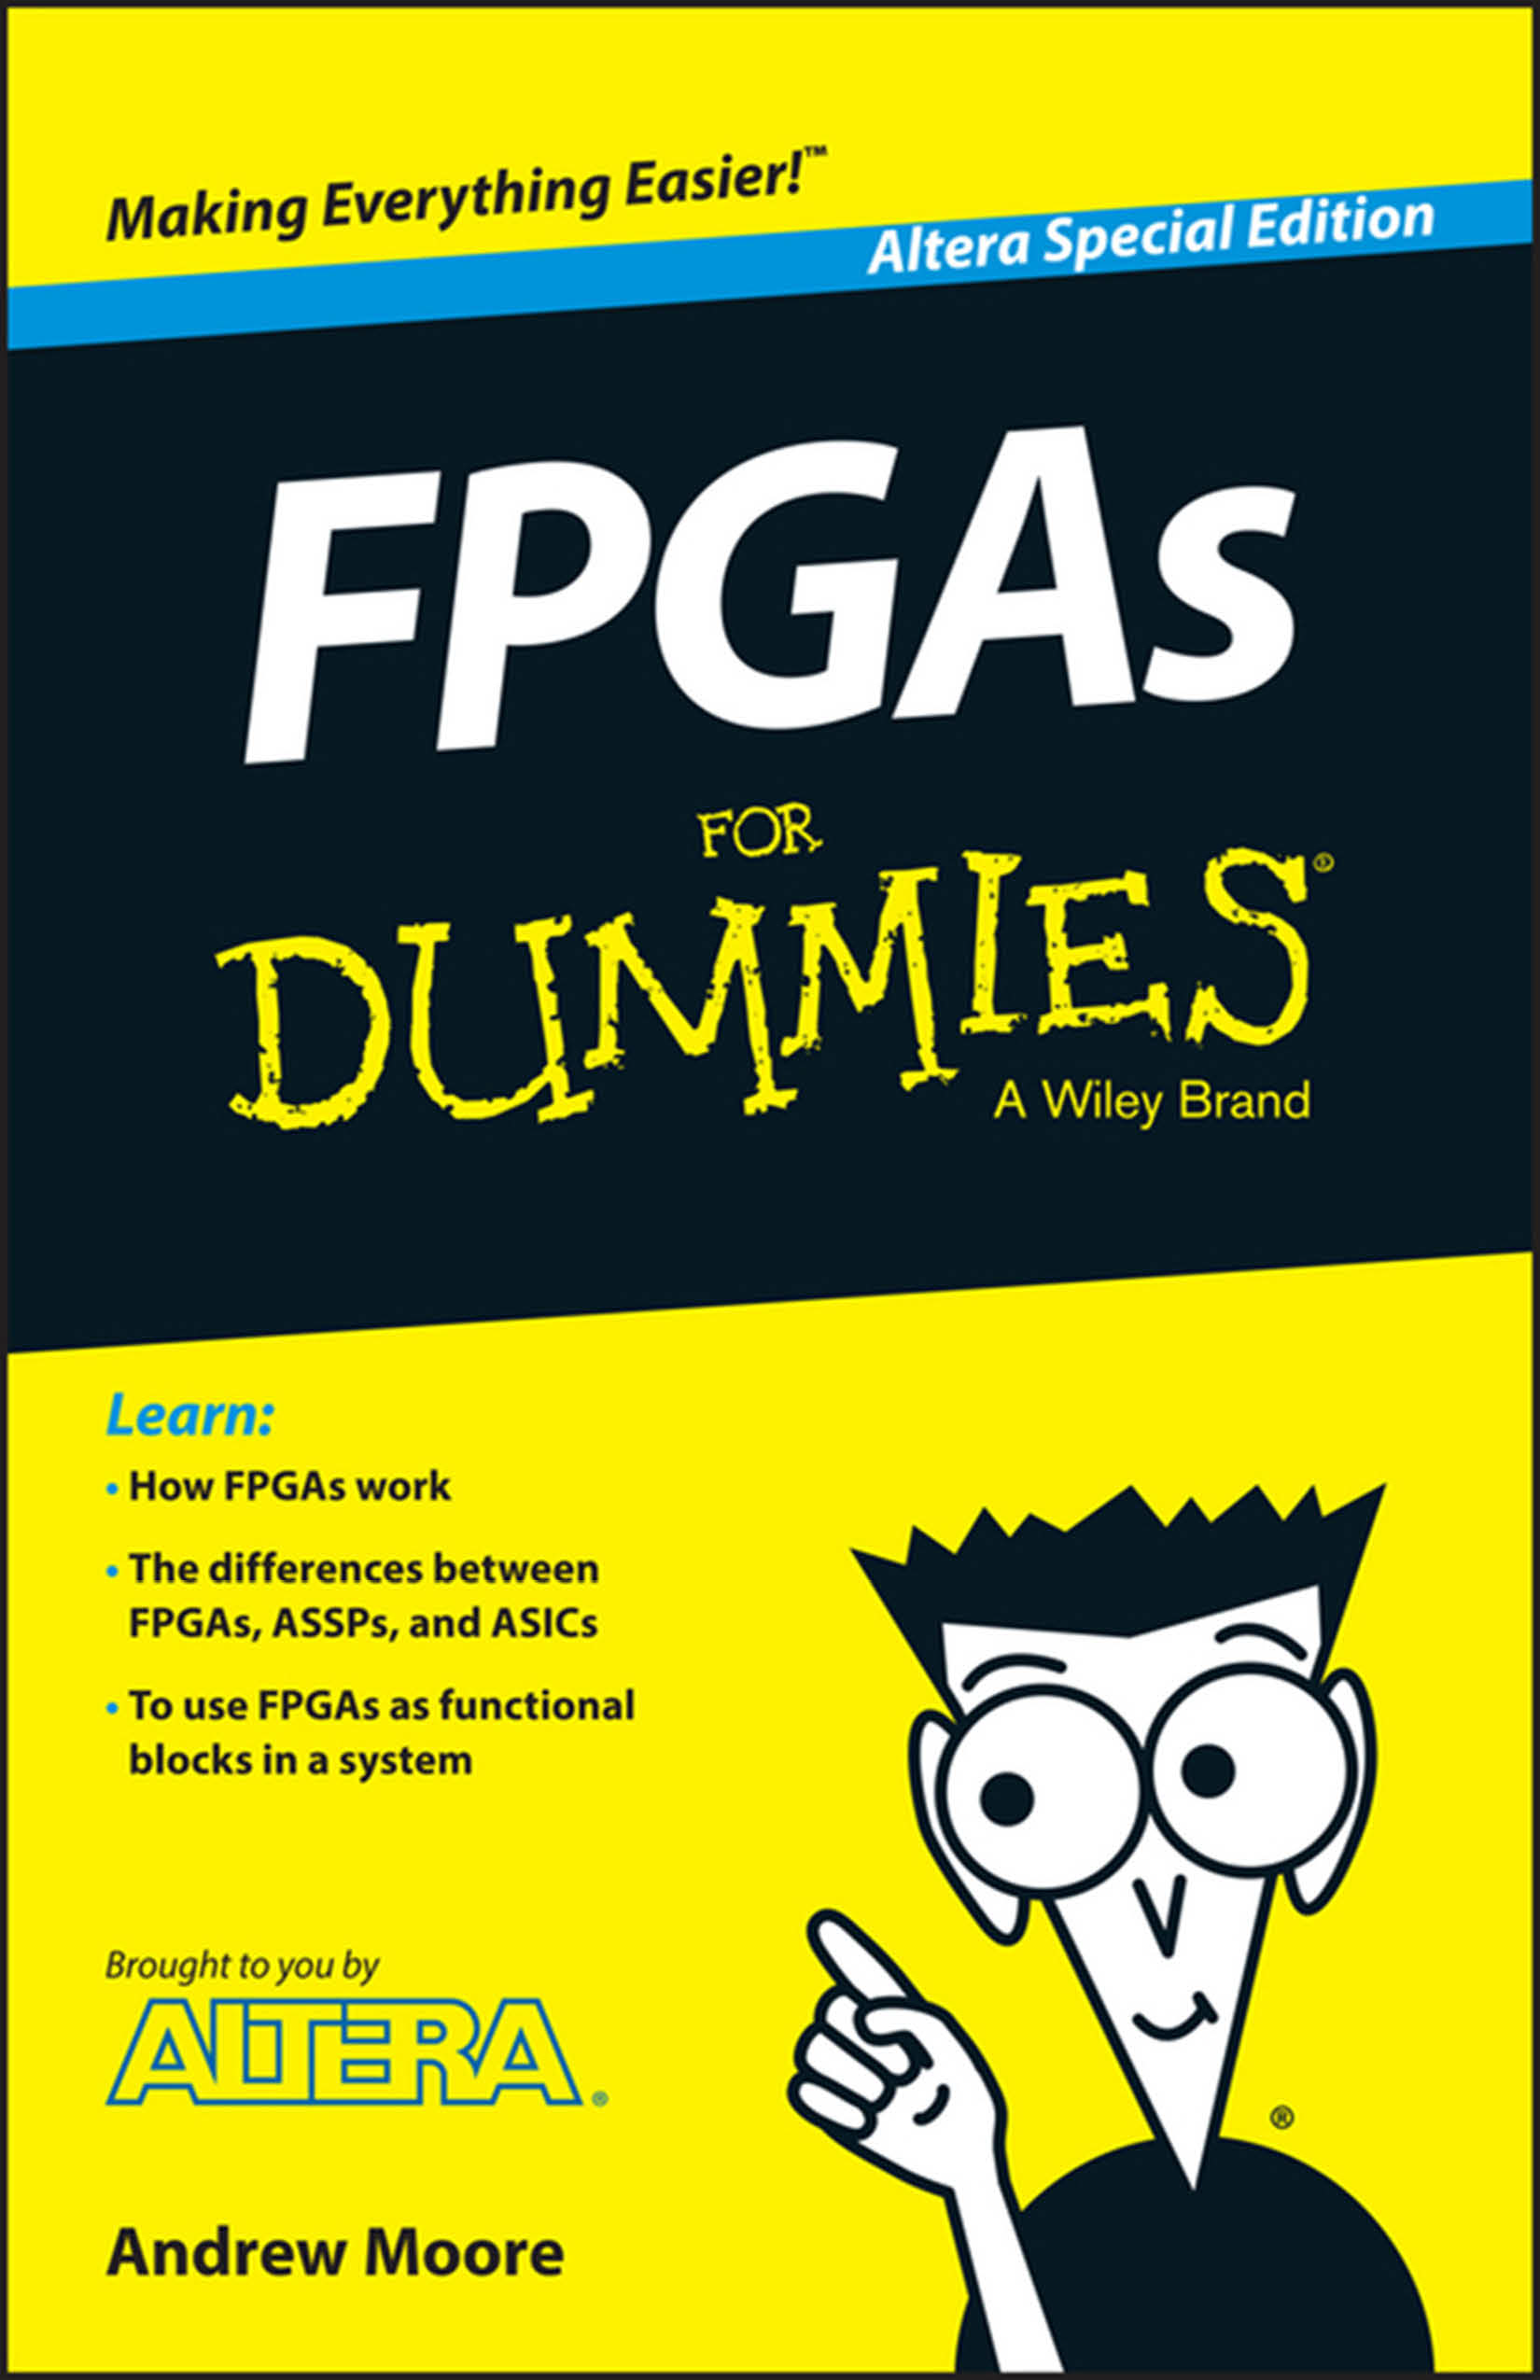 * FPGA for Dummies Altera Special Edition - Title (EN) *